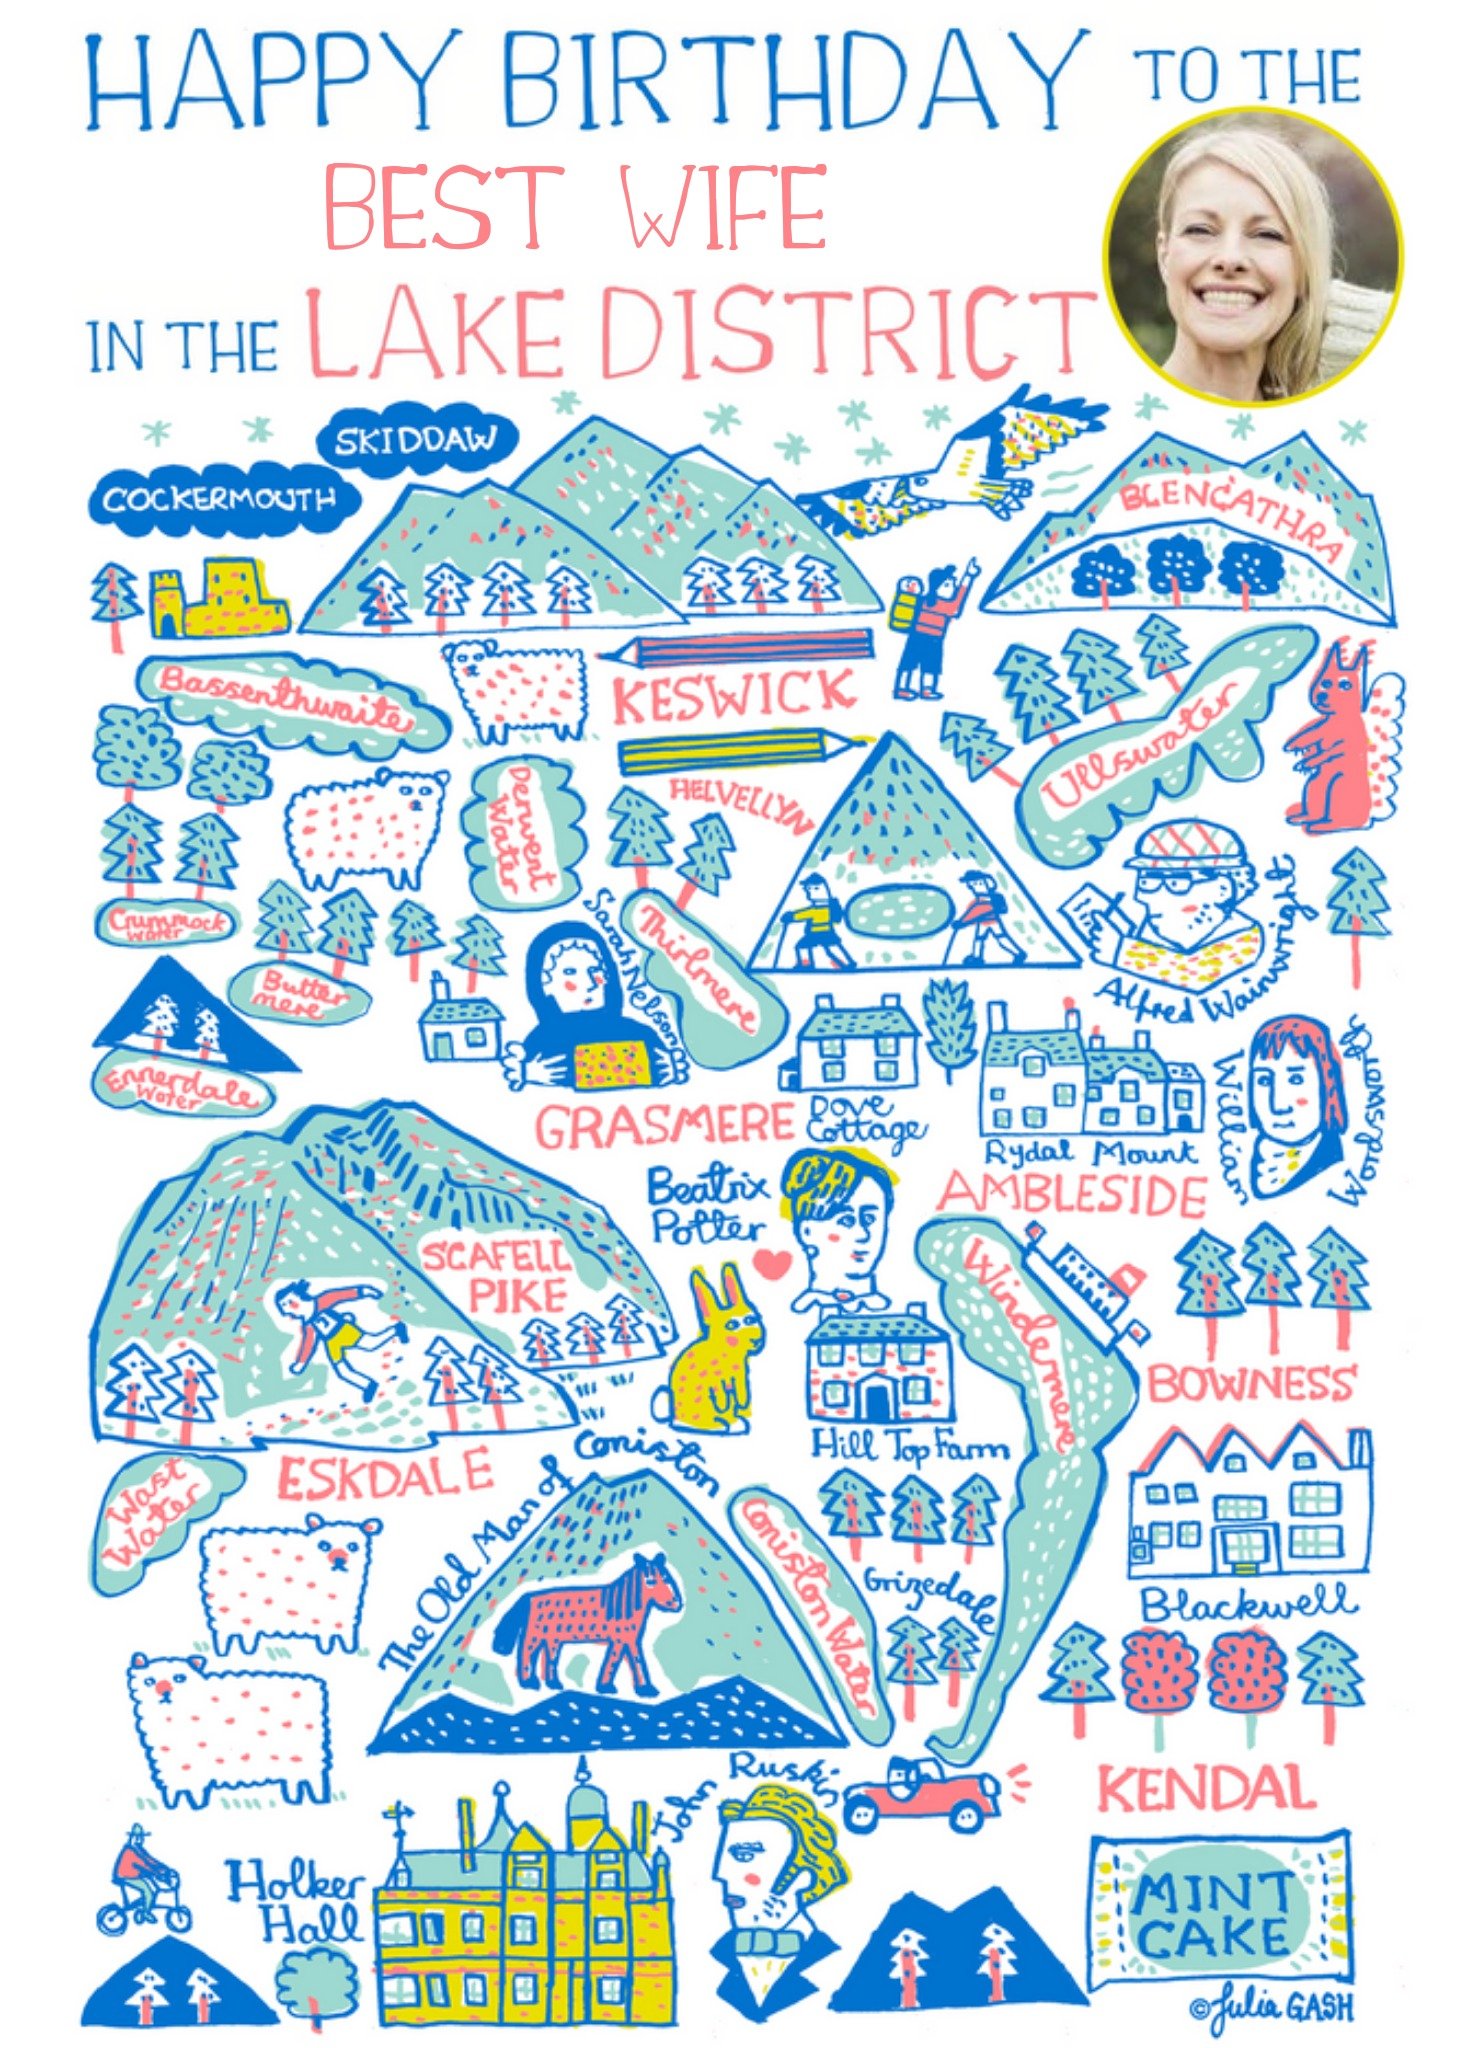 Moonpig Vibrant Collage Illustration Of The Lake District Photo Upload Birthday Card Ecard